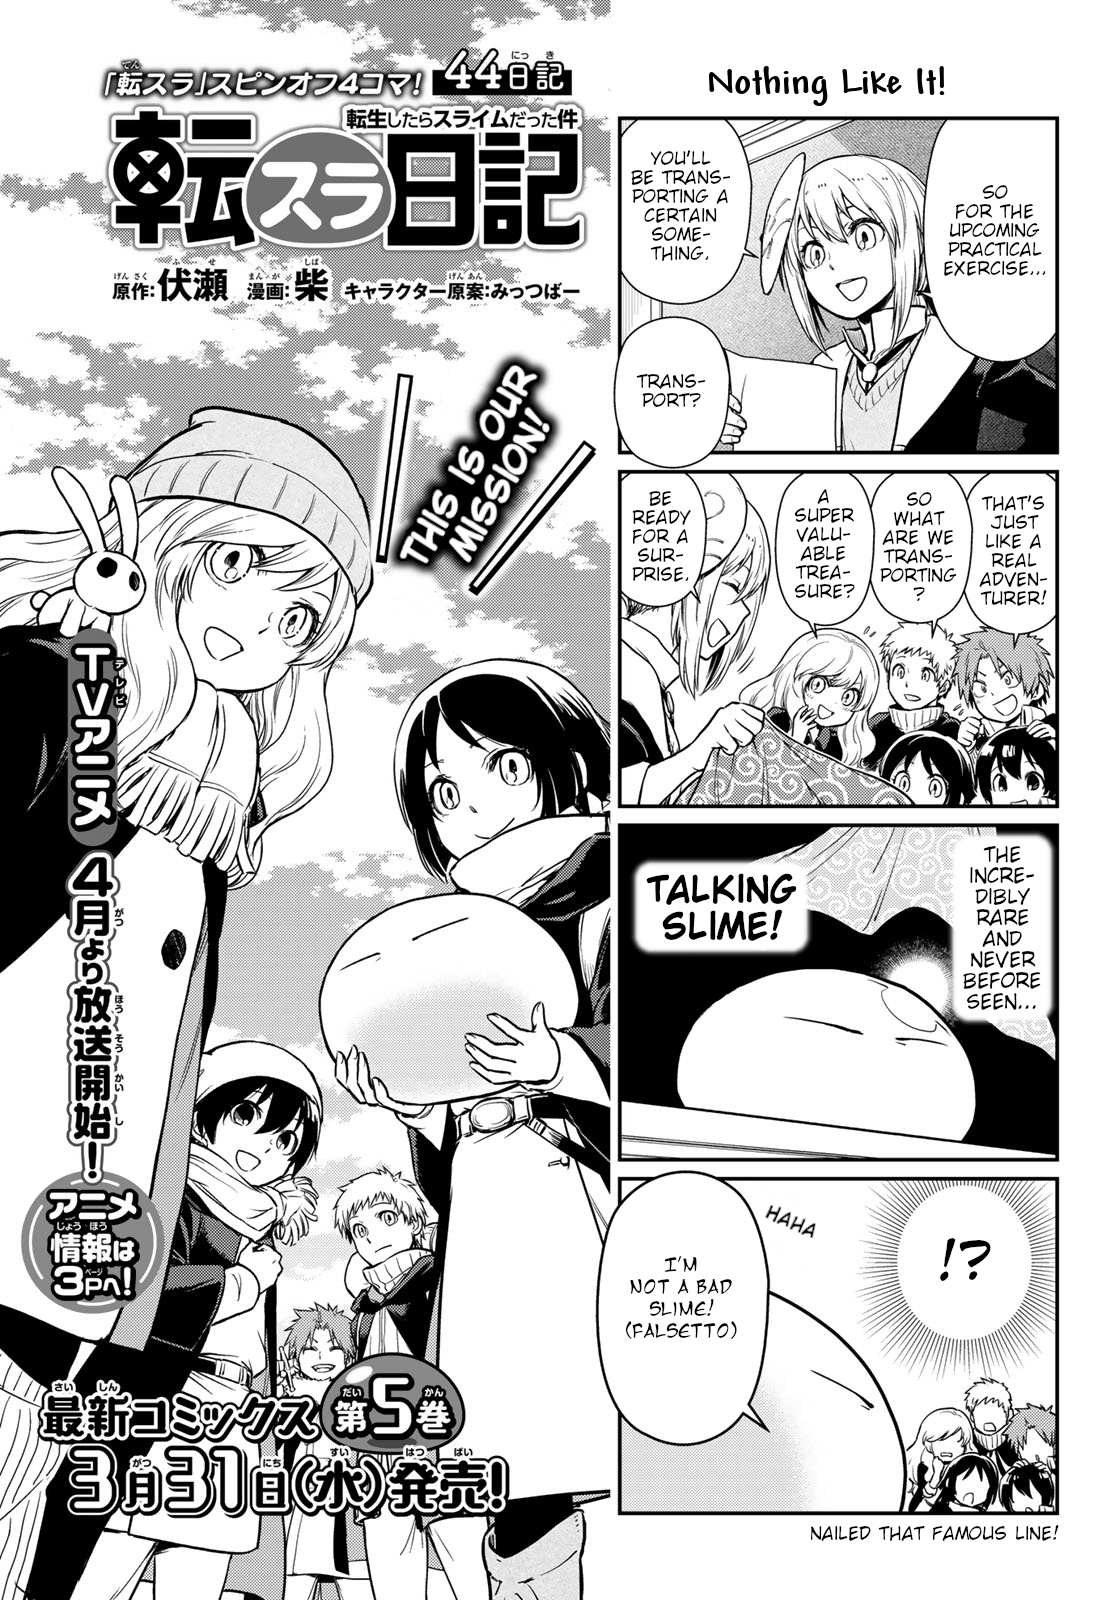 Read Manga Tensura Nikki Tensei Shitara Slime Datta Ken Chapter 44 Read Manga Online In English Free Manga Reading